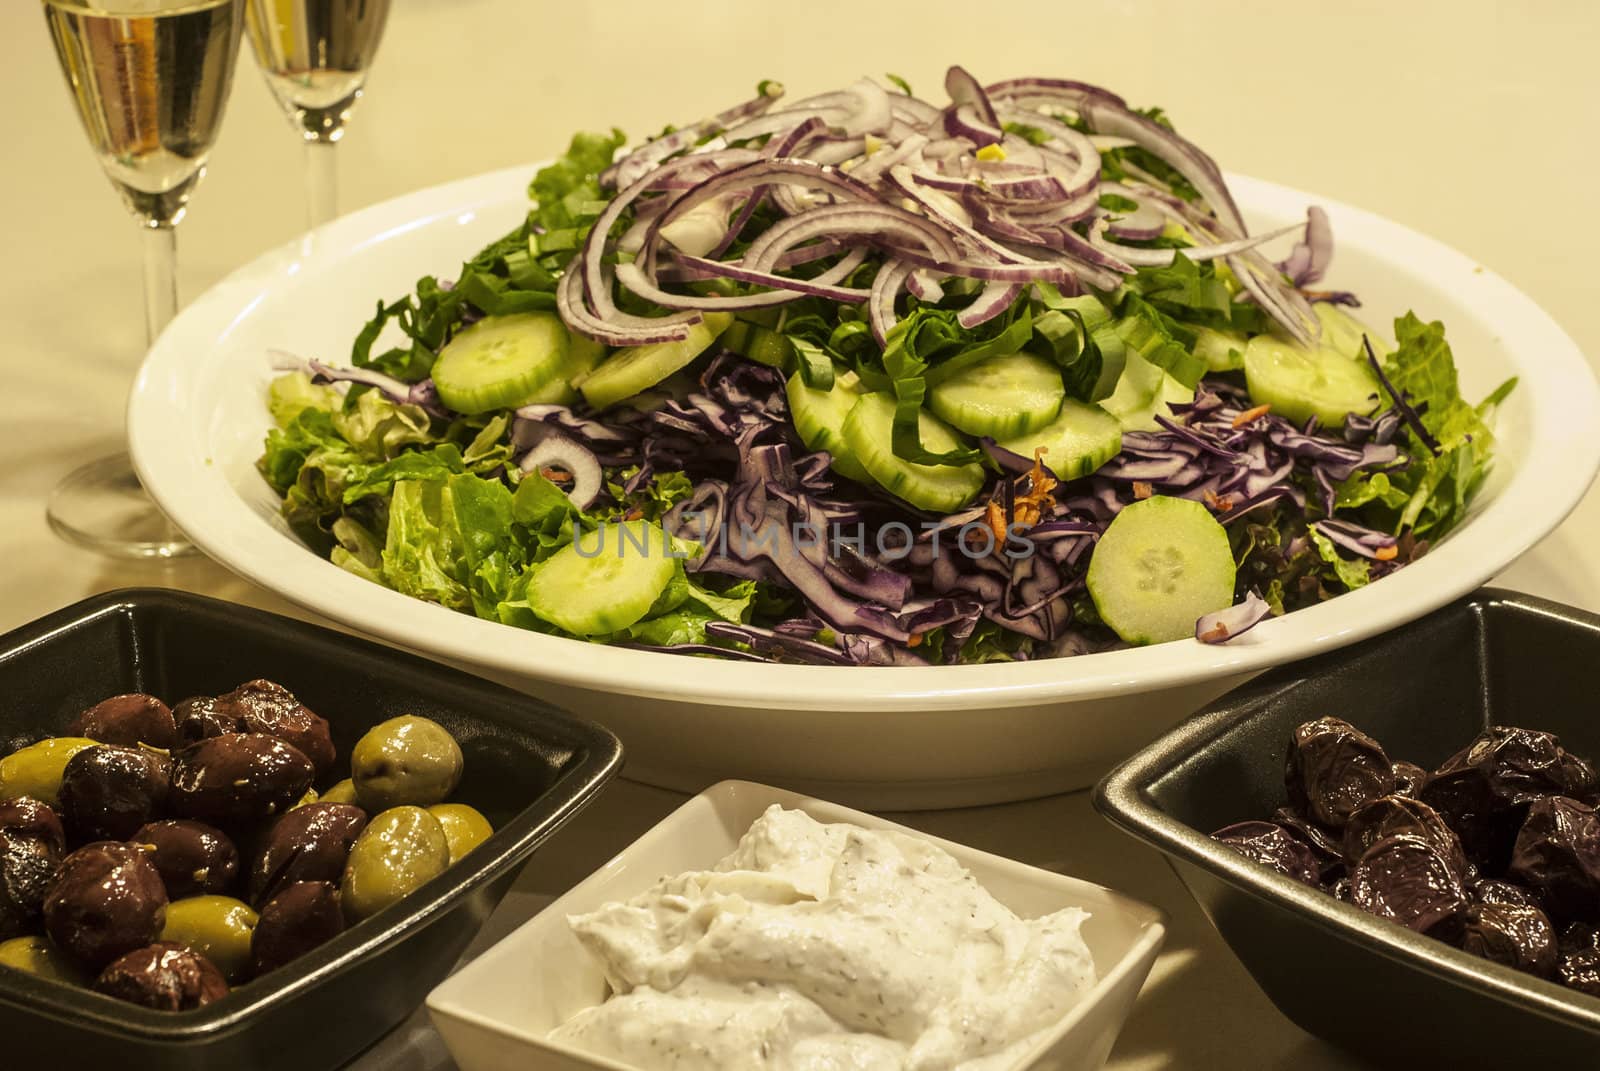 Salad dish, olives, caviar,white wine glasses